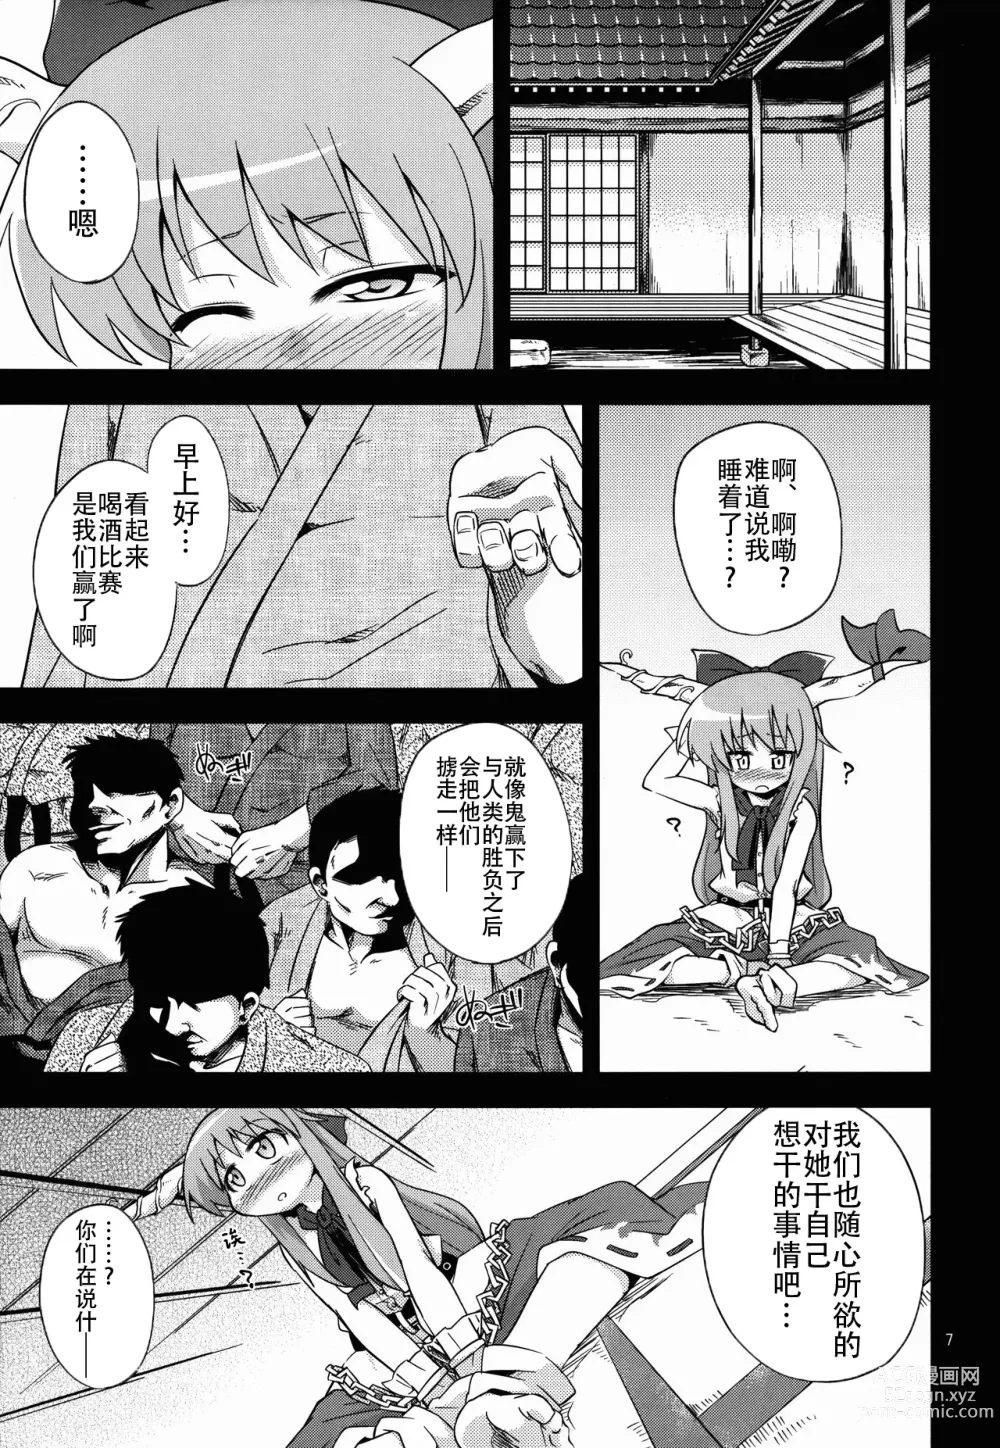 Page 7 of doujinshi Oni Hankyo Hanki